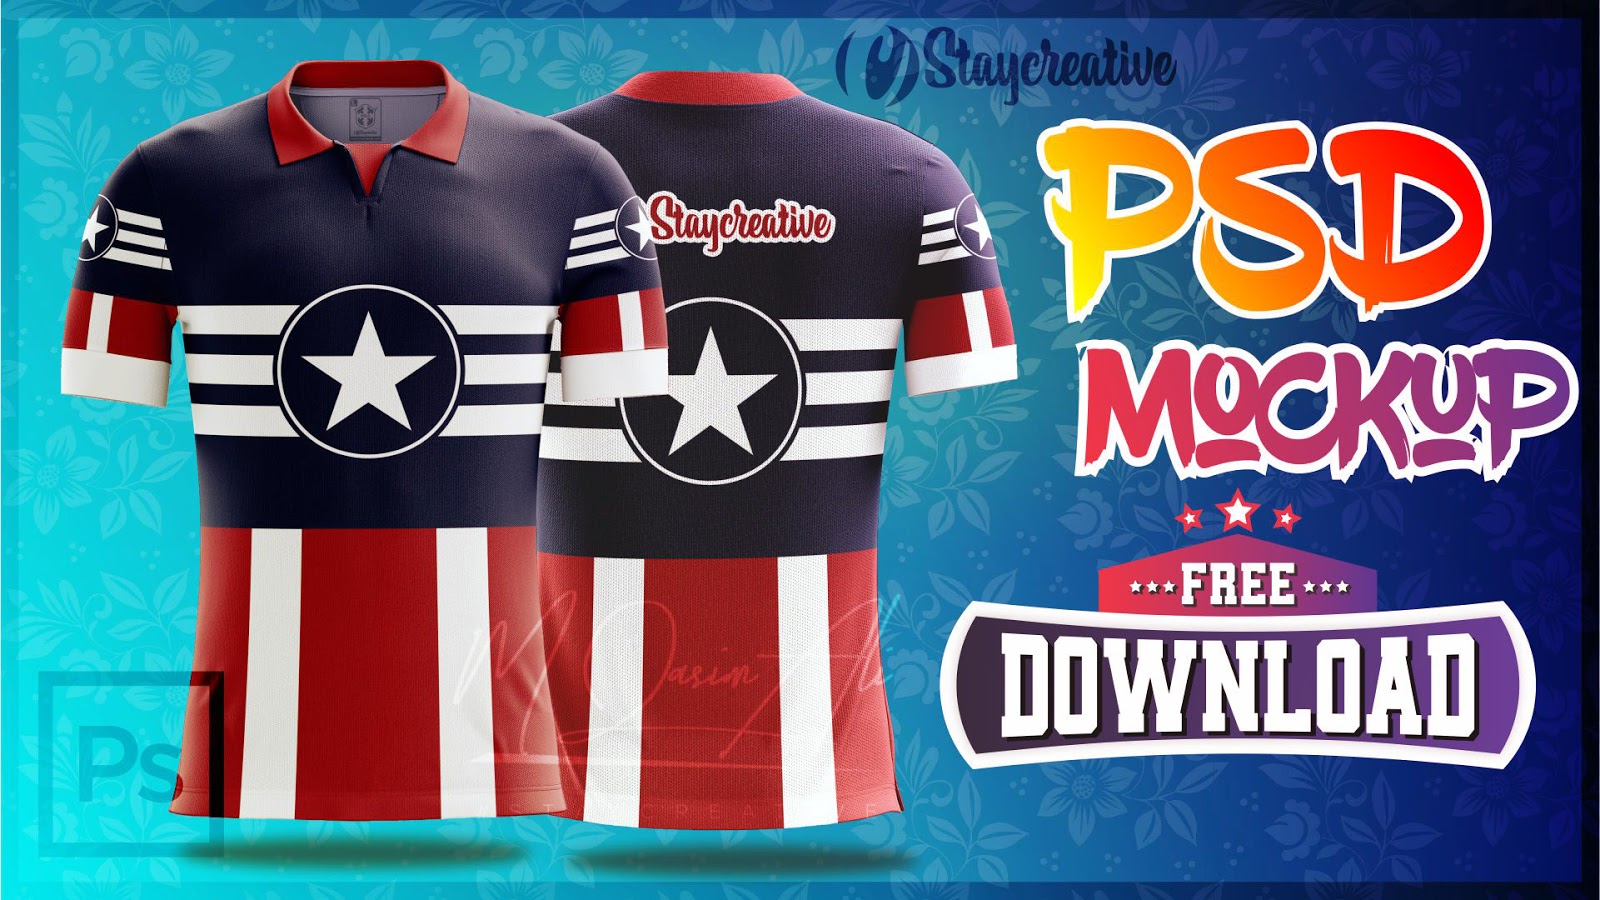 Download Football/Soccer Kit Design Tutorial || Football Shirt Template PSD Free Download - Photoshop CC ...